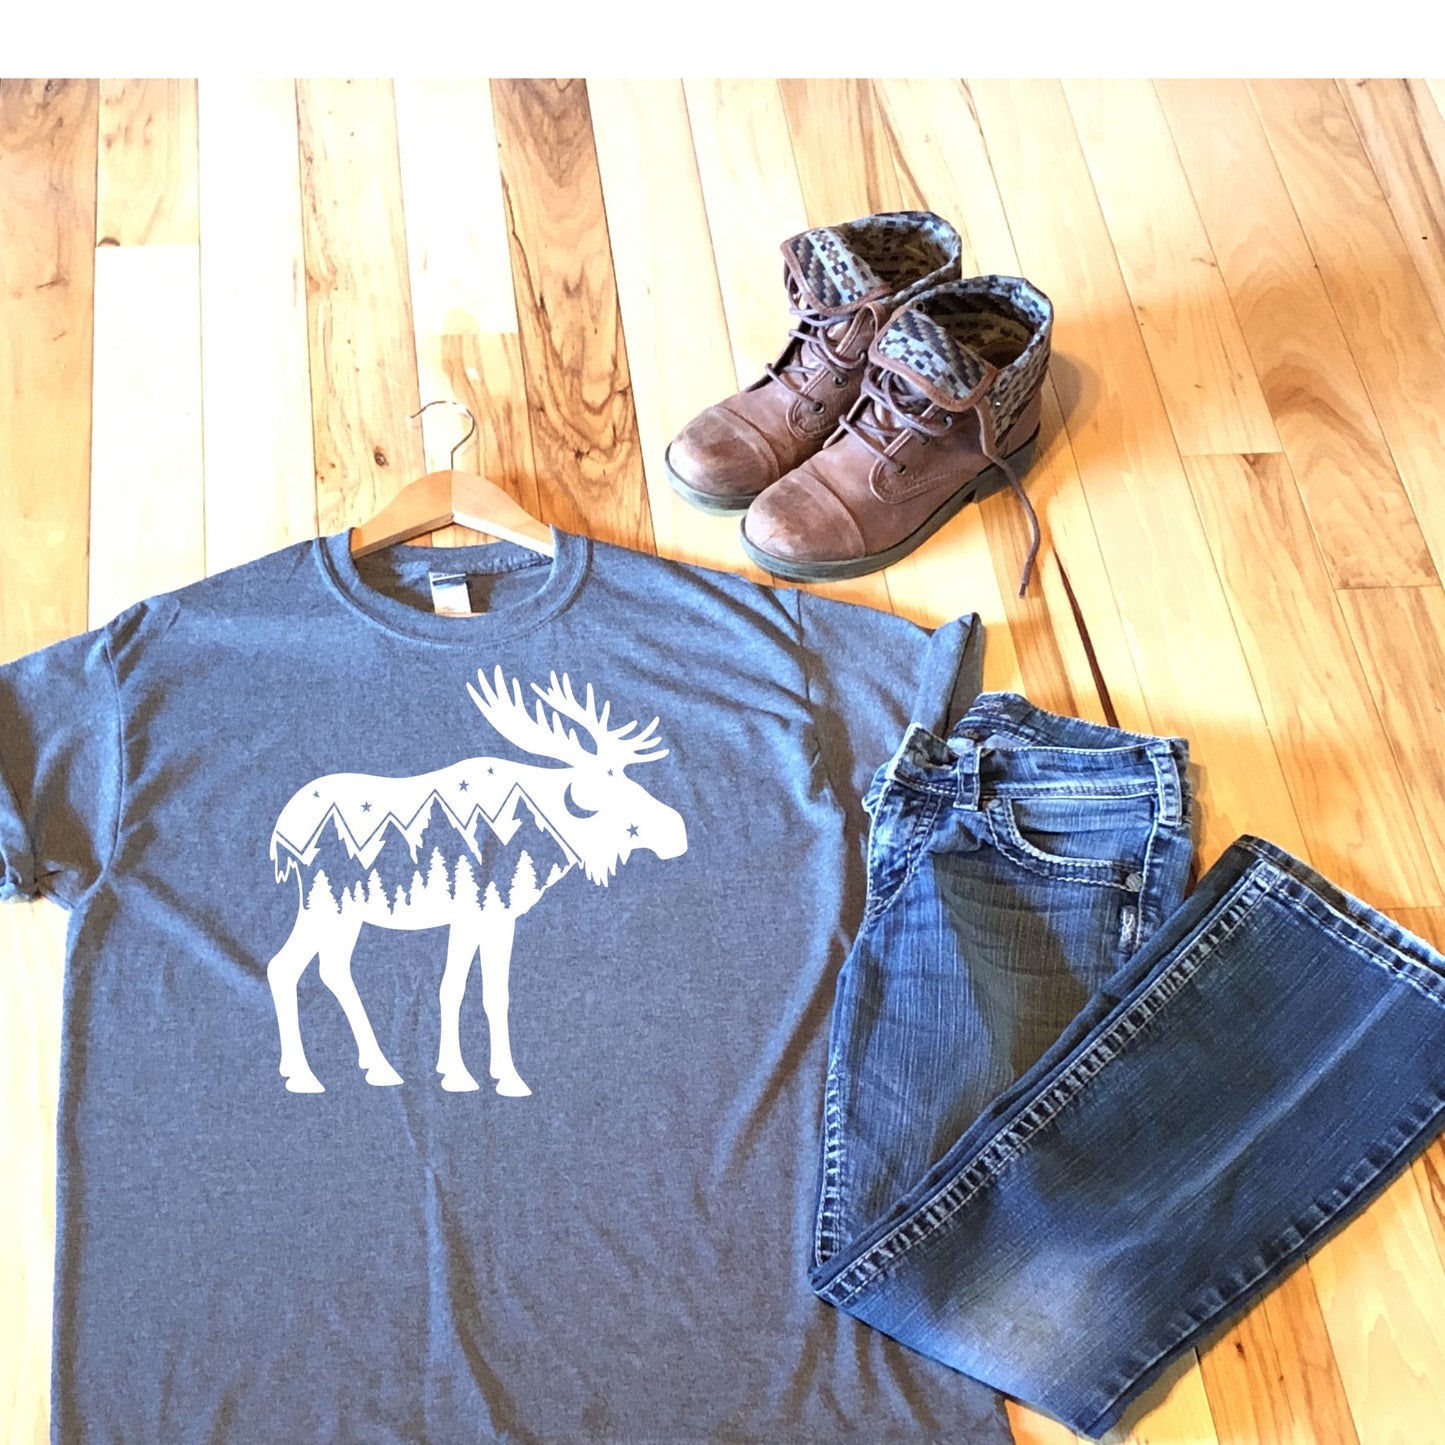 Moose Mountain scene, wild Montana, wild Alaska scene t-shirt, short sleeve hiking shirt